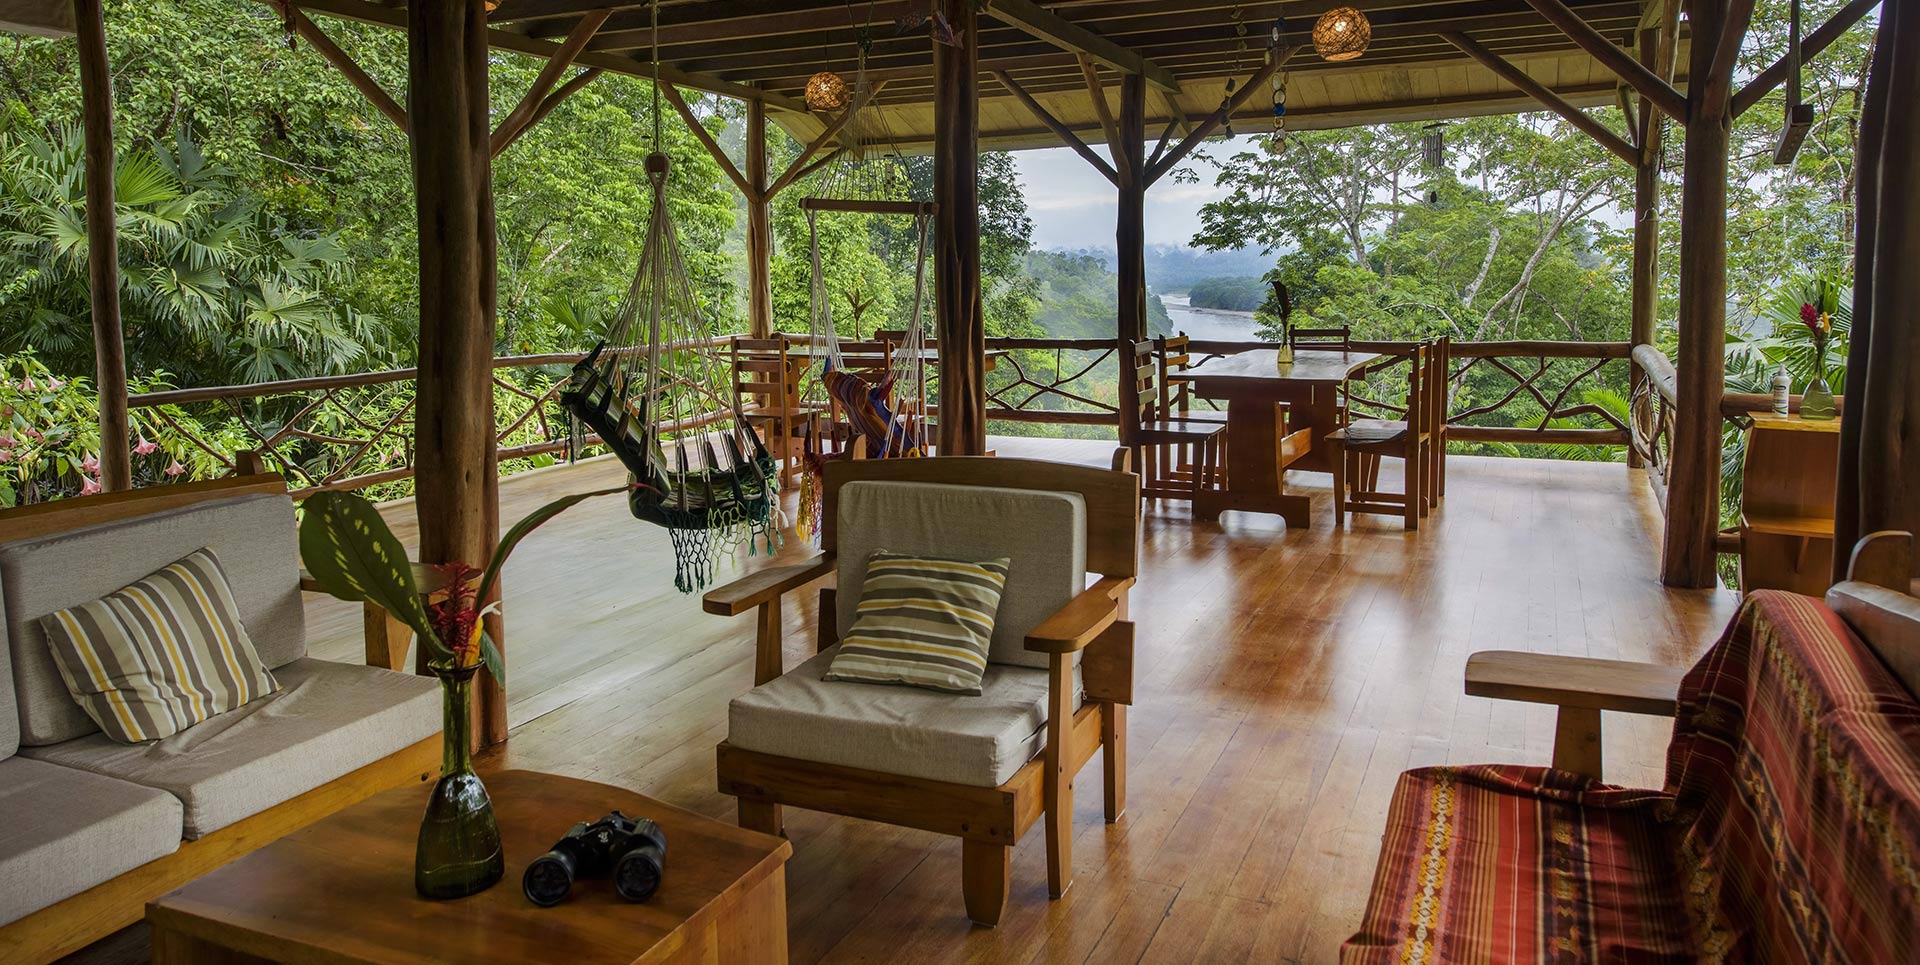 Living Room Gaia lodge Ecuador Amazon